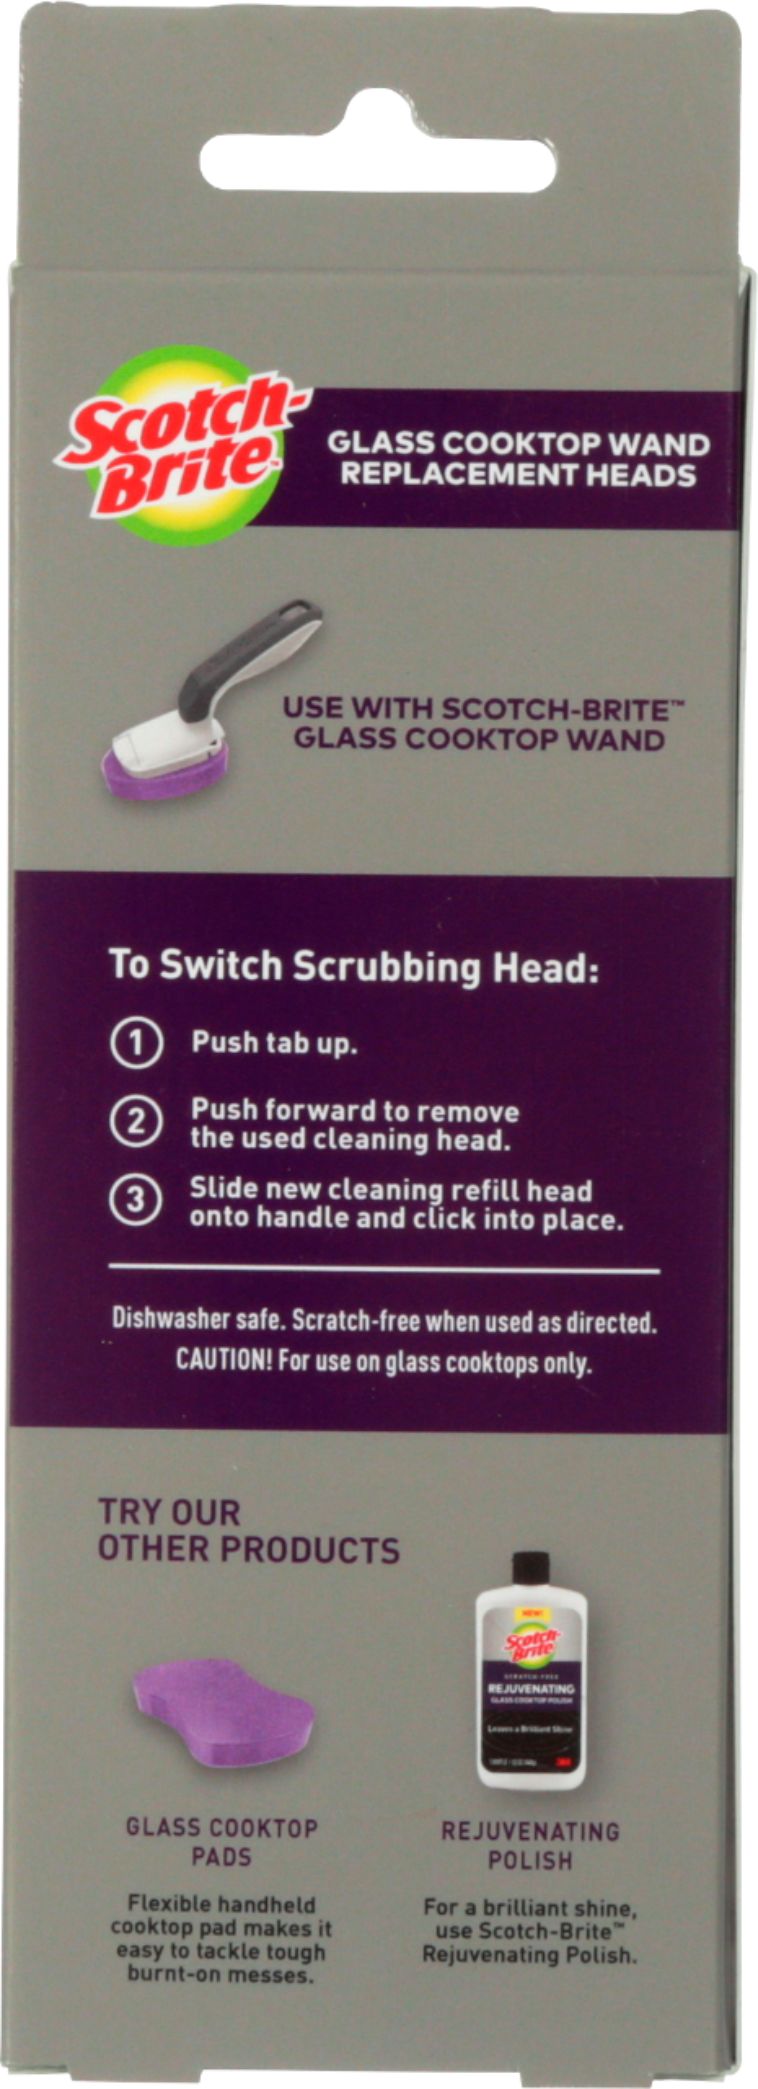 Scotch Brite Scratch-Free Glass Cooktop Wand 2 Replacement Heads